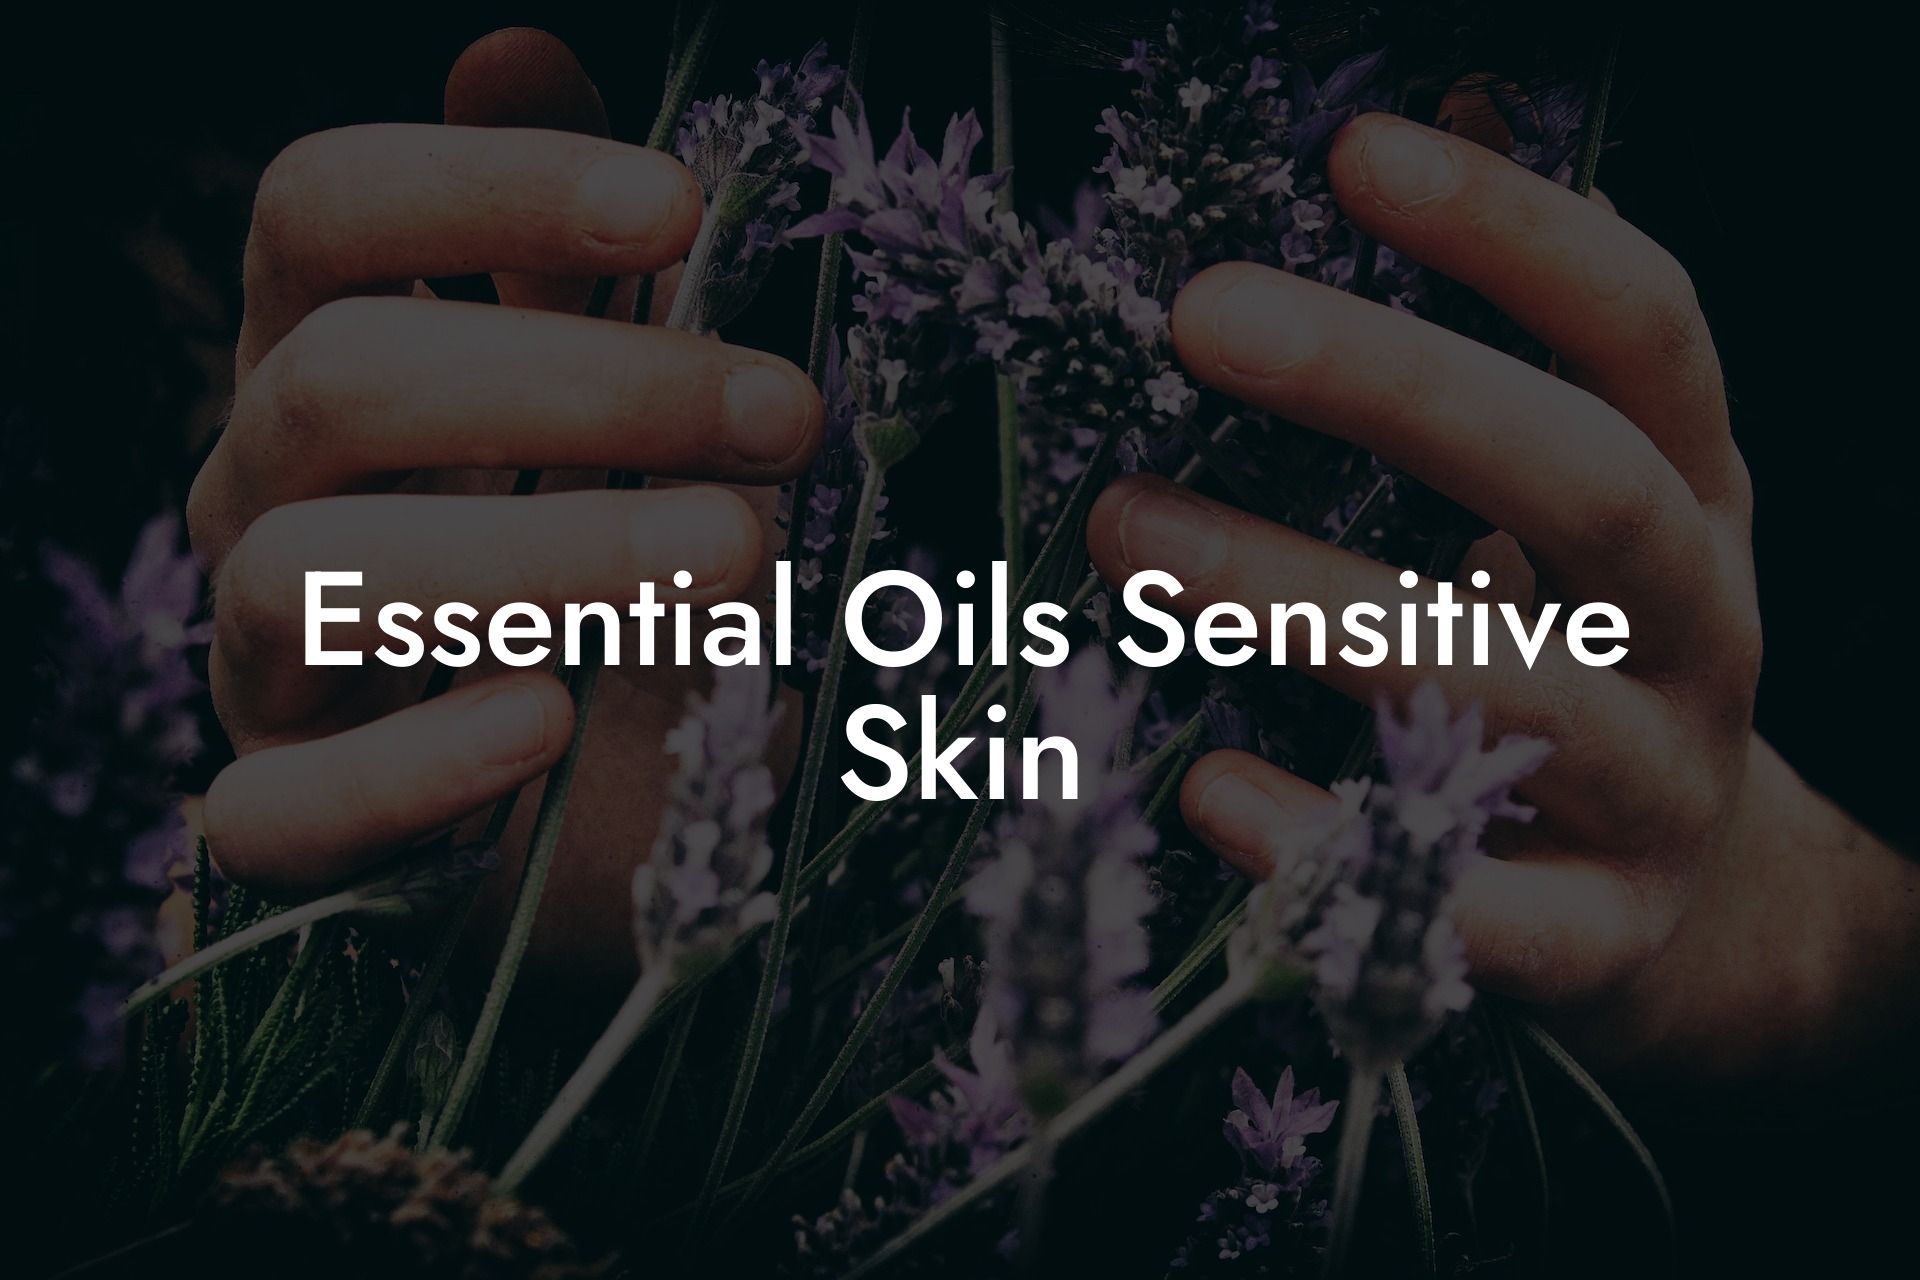 Essential Oils Sensitive Skin